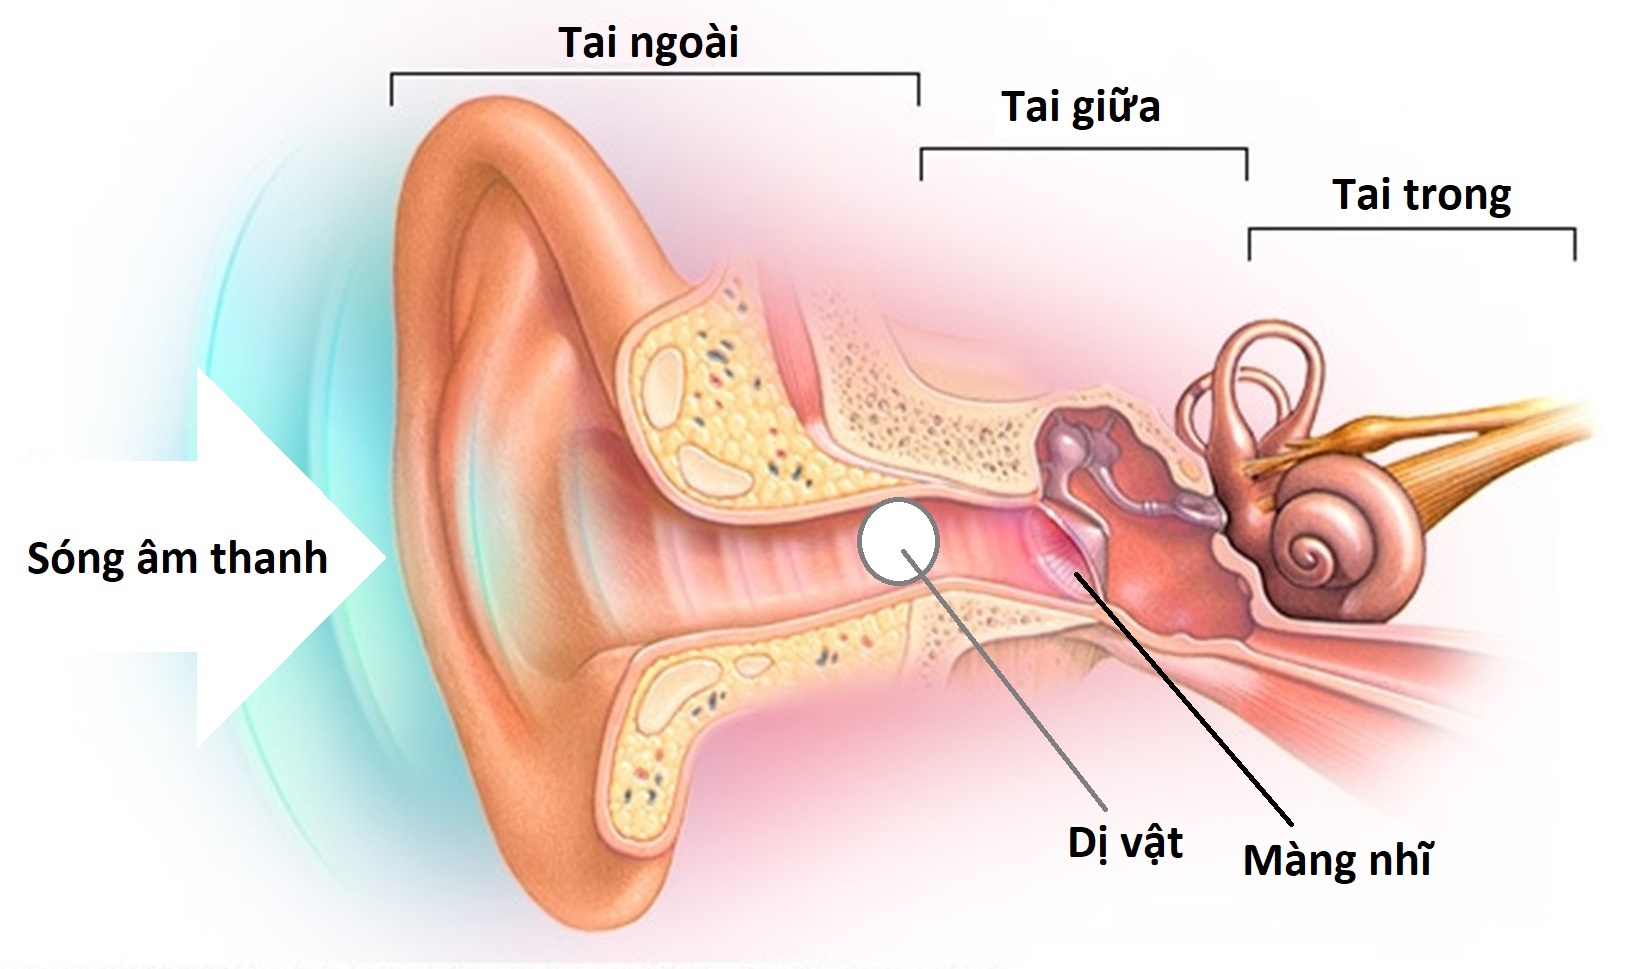 Lấy dị vật trong tai